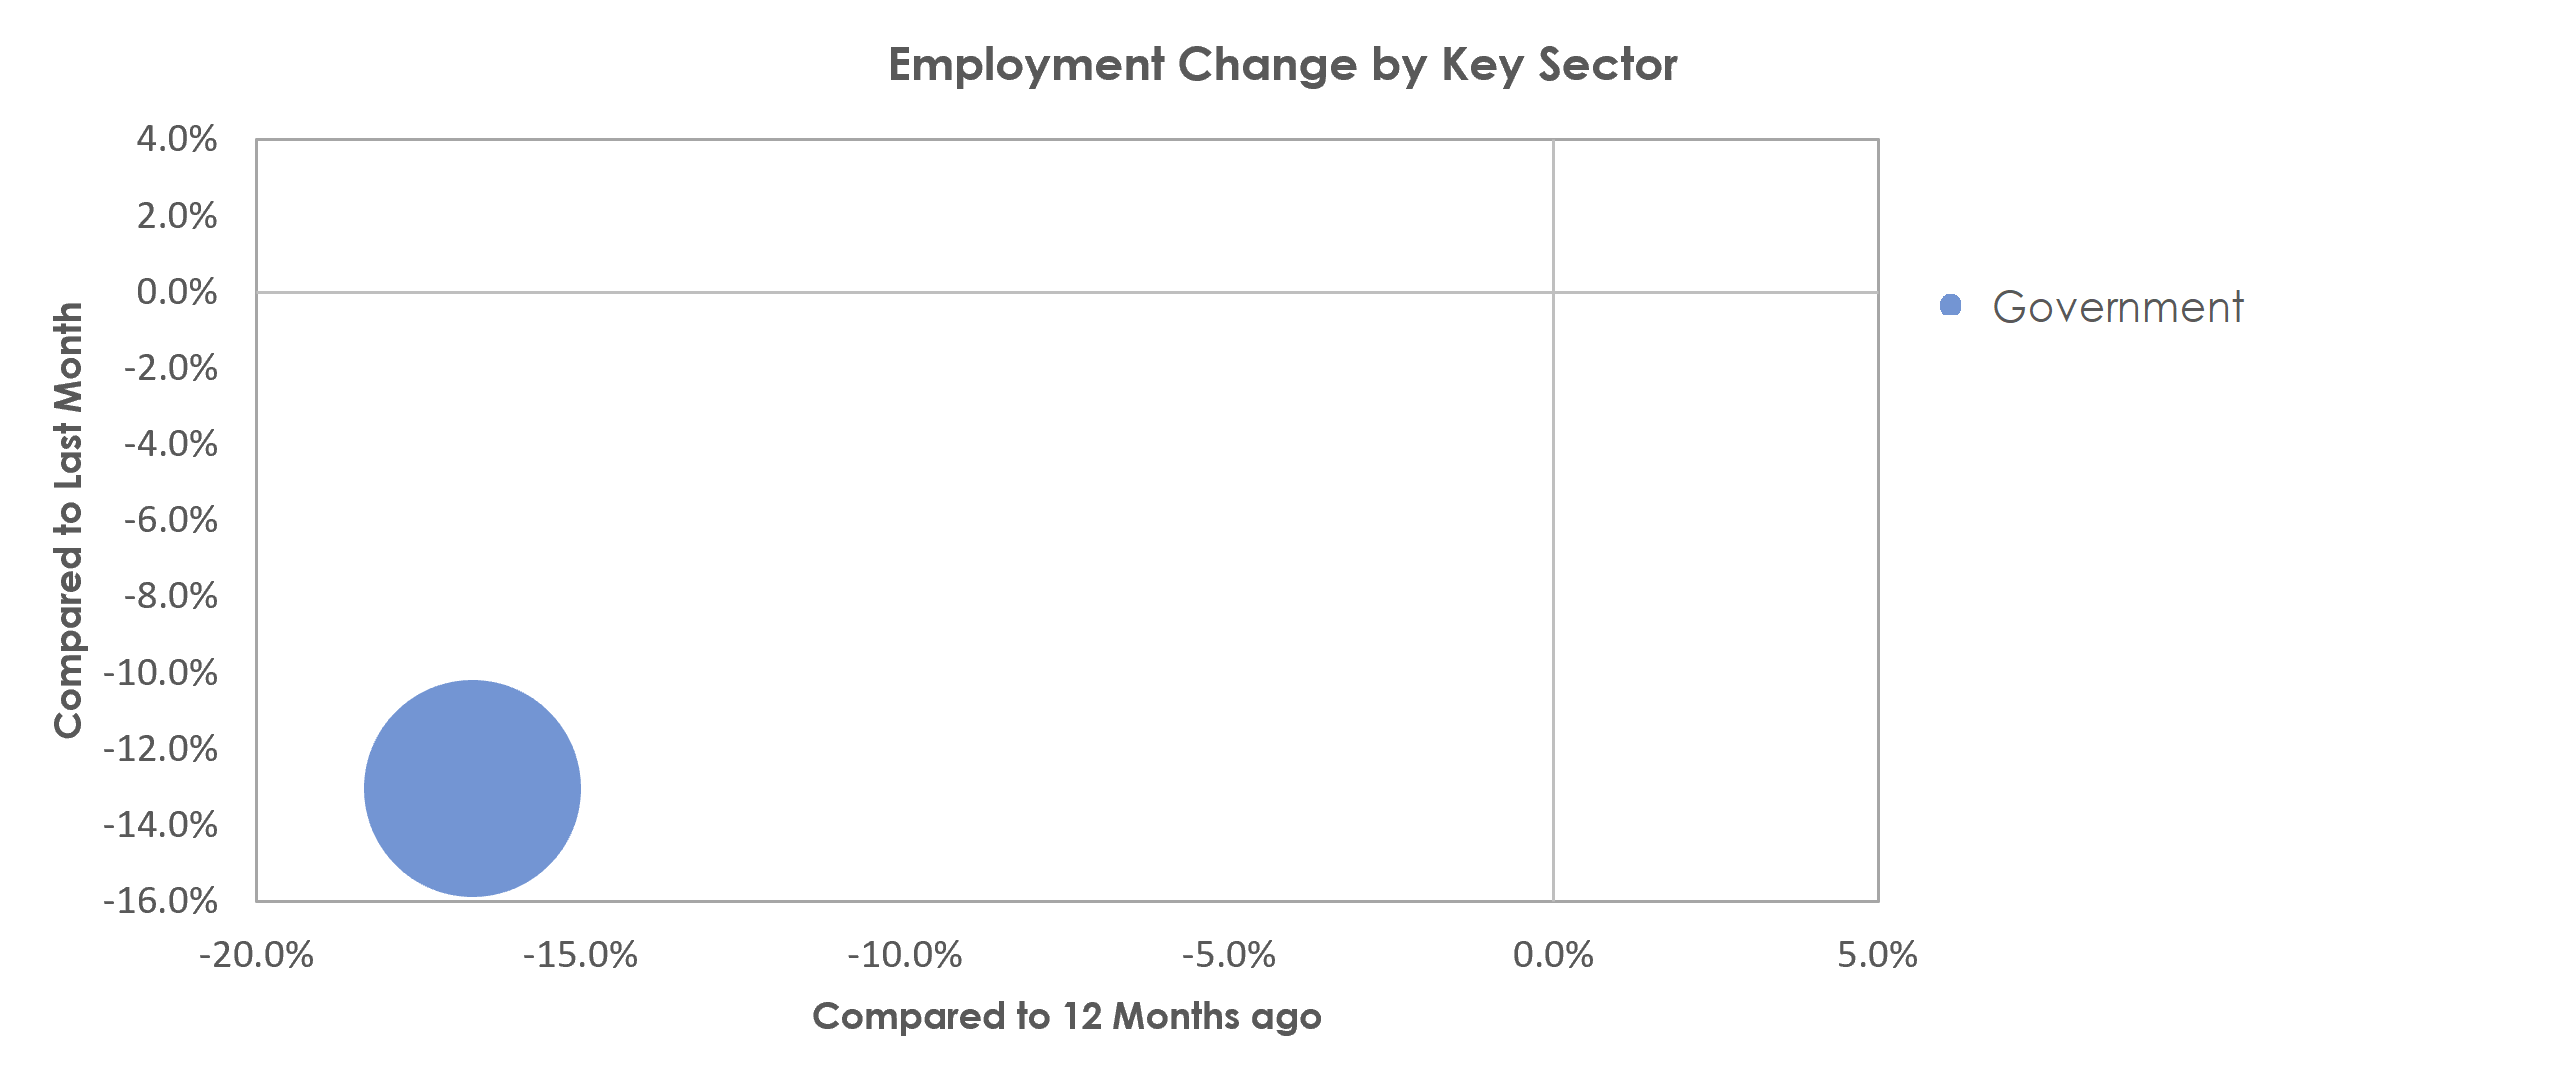 Hilton Head Island-Bluffton-Beaufort, SC Unemployment by Industry February 2021